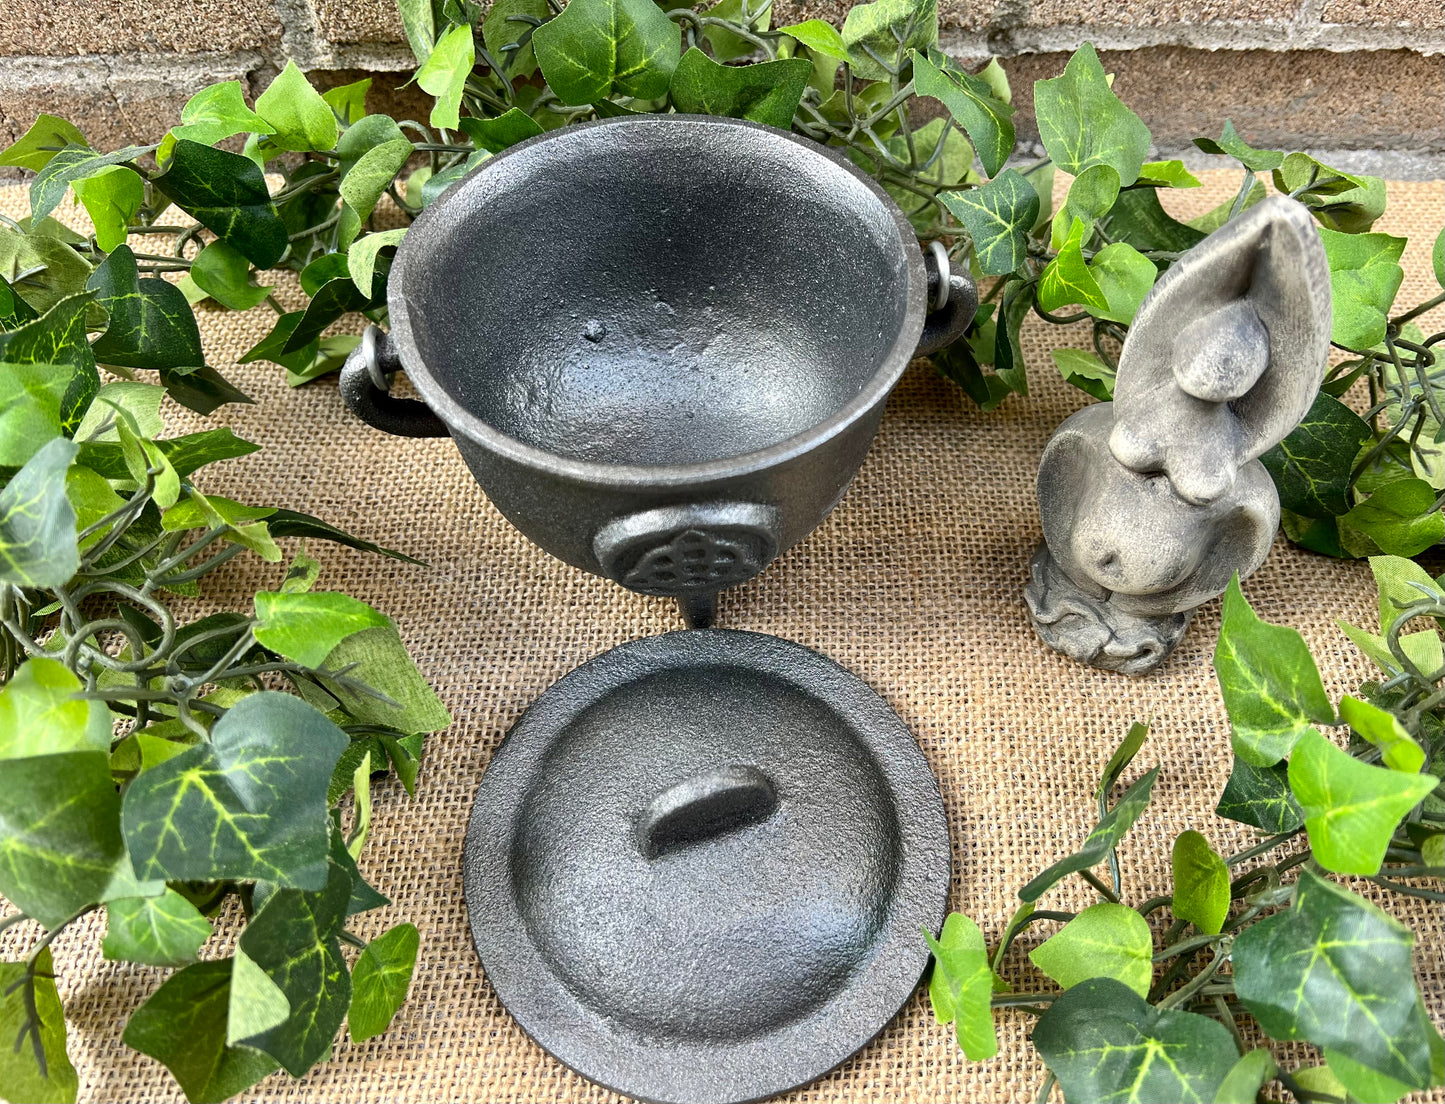 Triquetra Medium Cast Iron Cauldron with Lid 4.5 inch